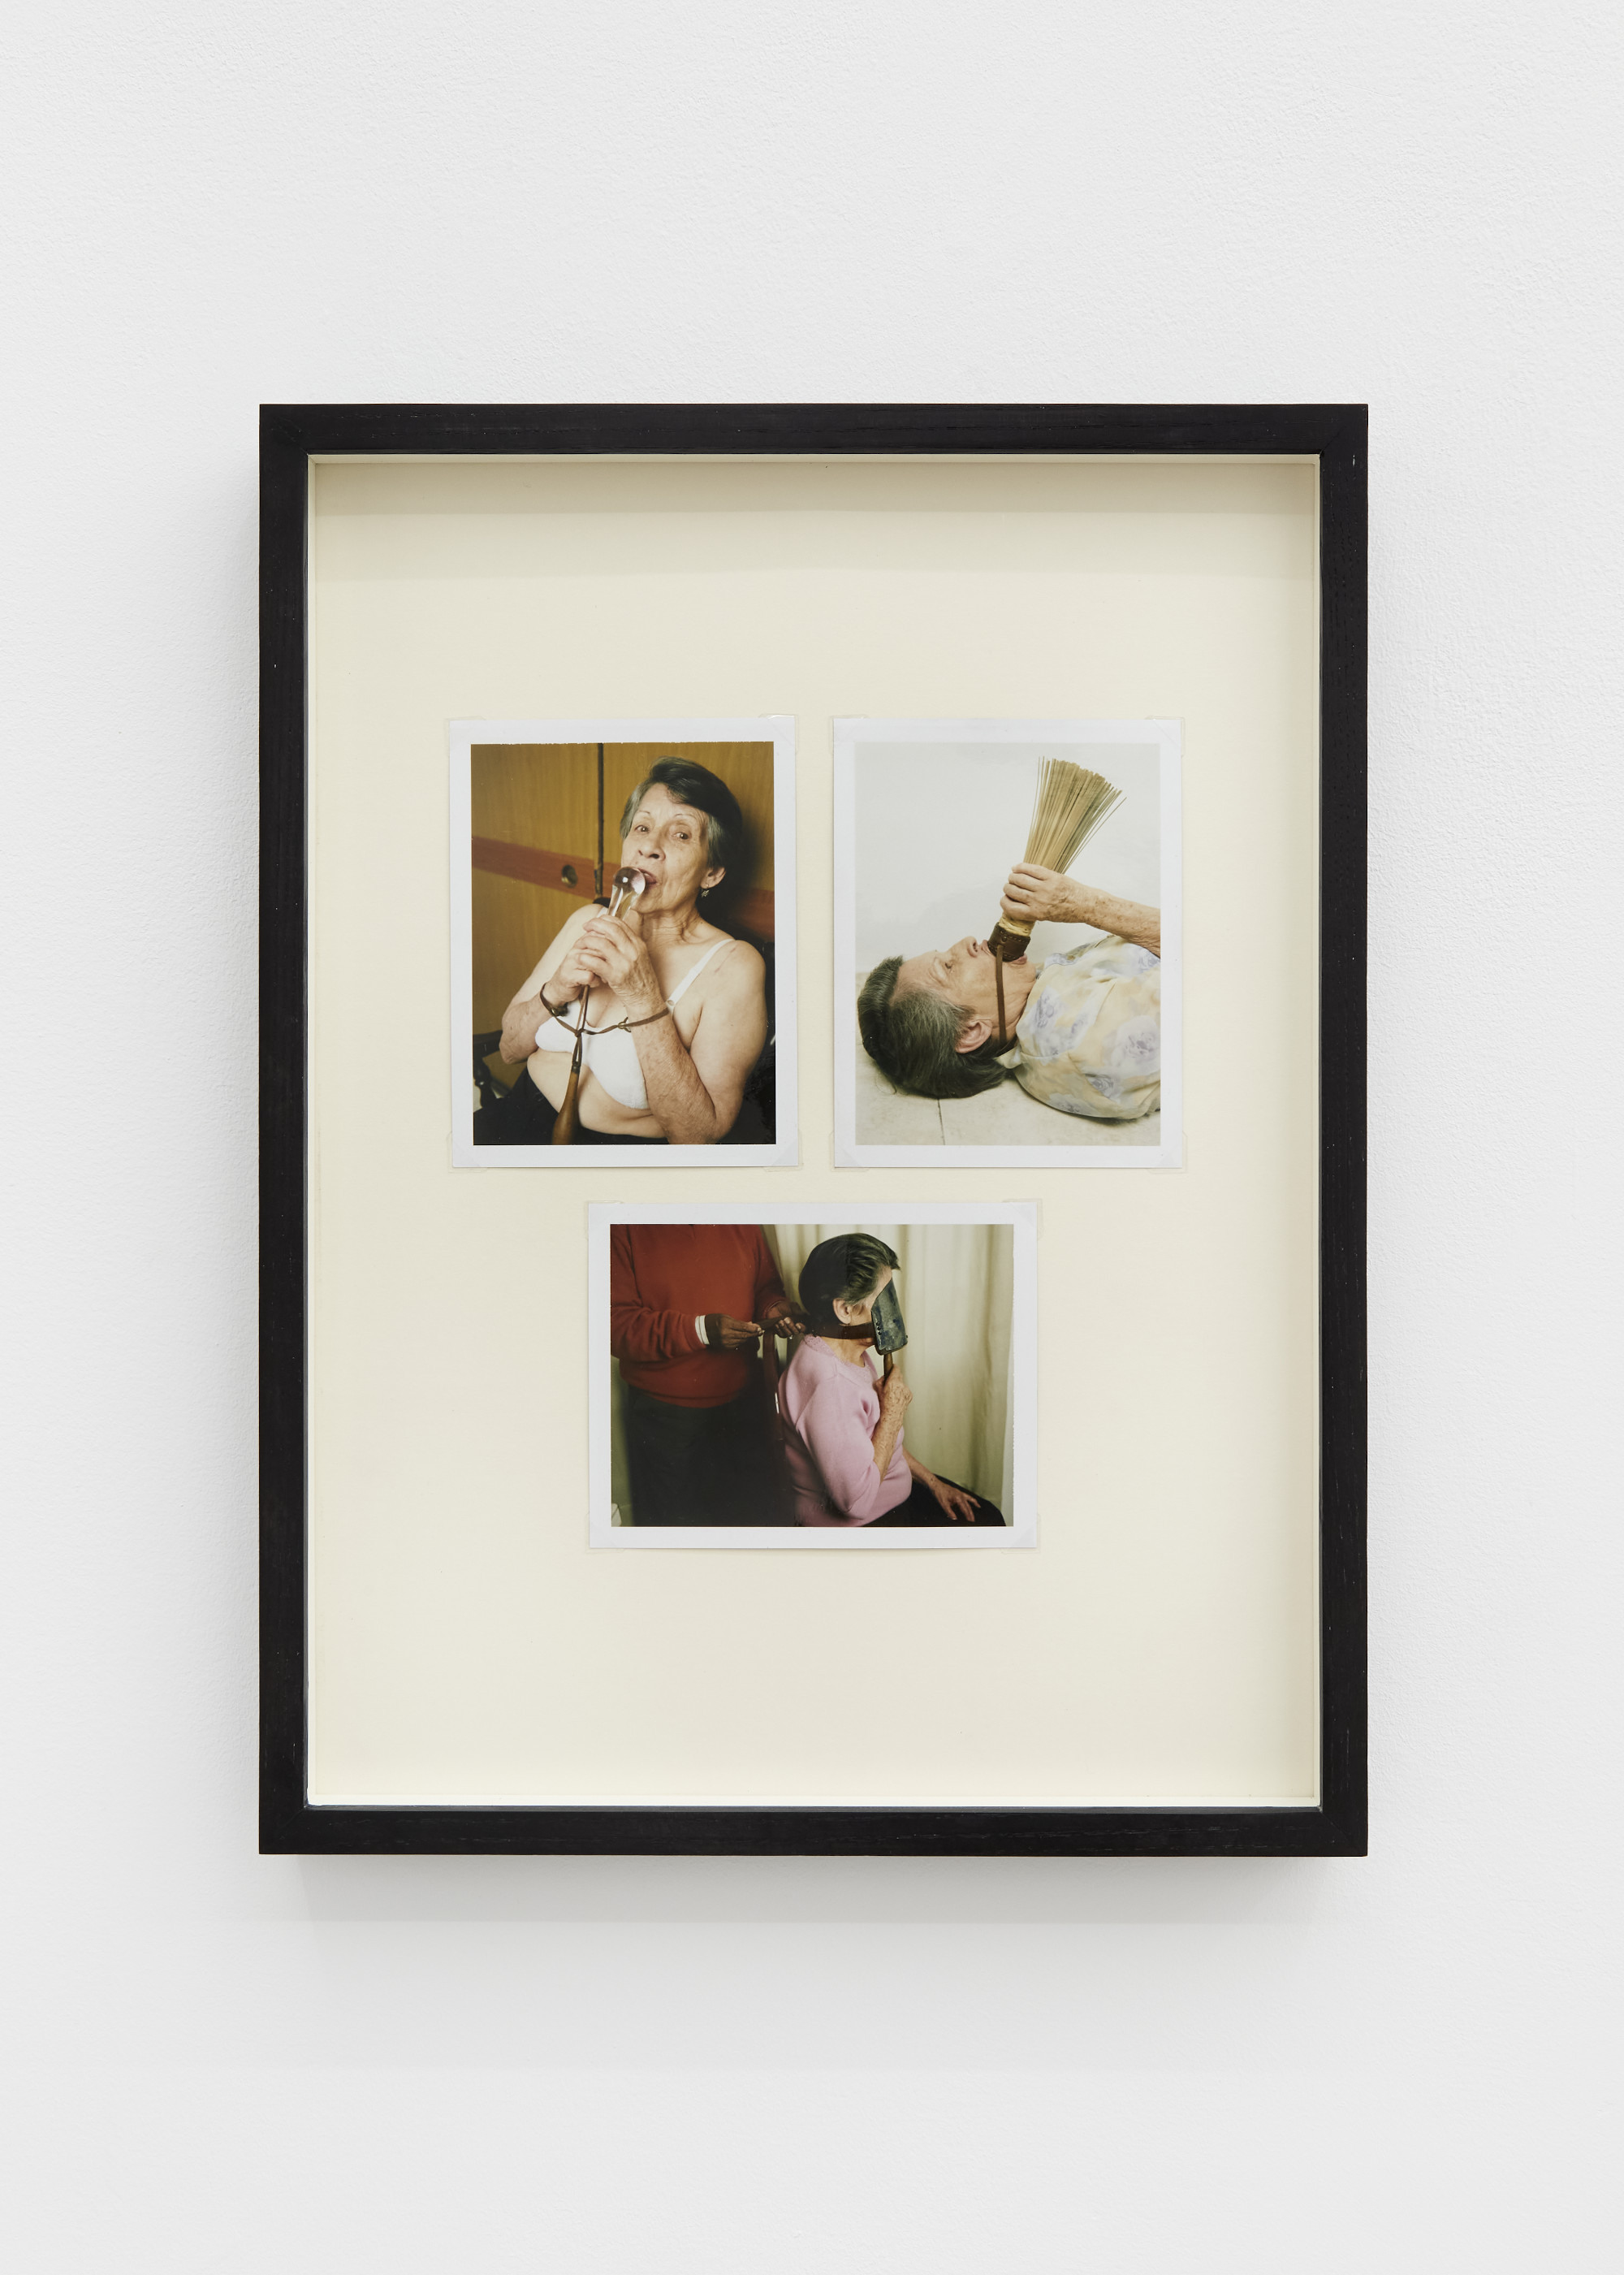   Juan Betancurth, Nydia, 2012. Polaroid (1/1), 41.5 x 31.5 cm (framed)